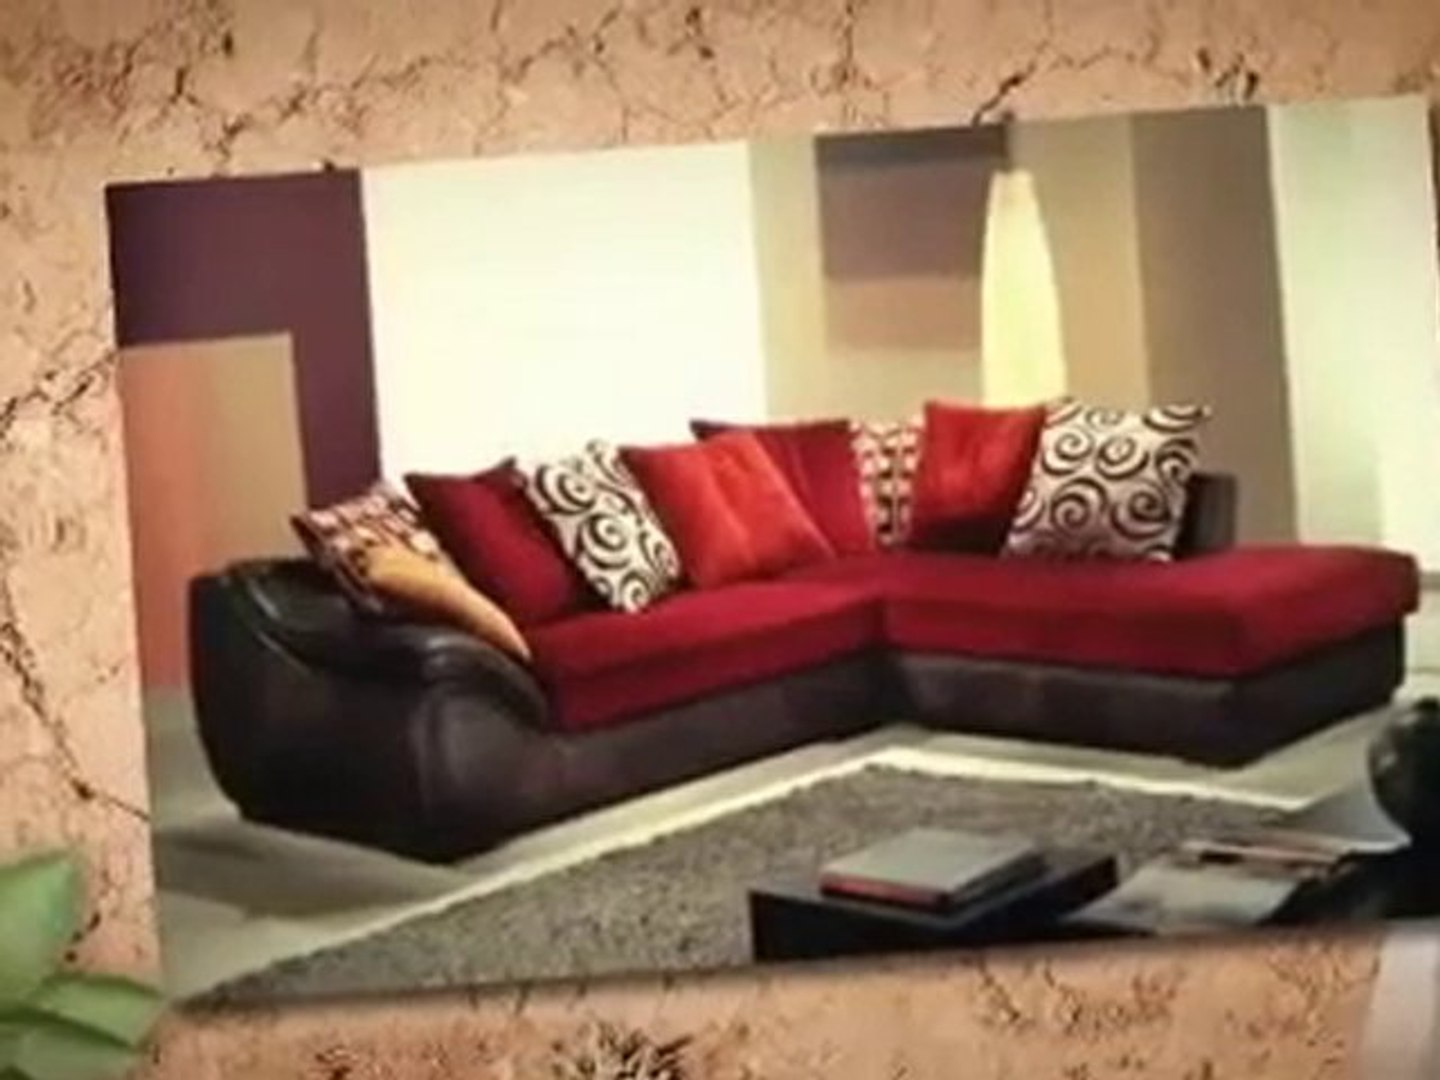 I divani di Aiazzone - Video Dailymotion